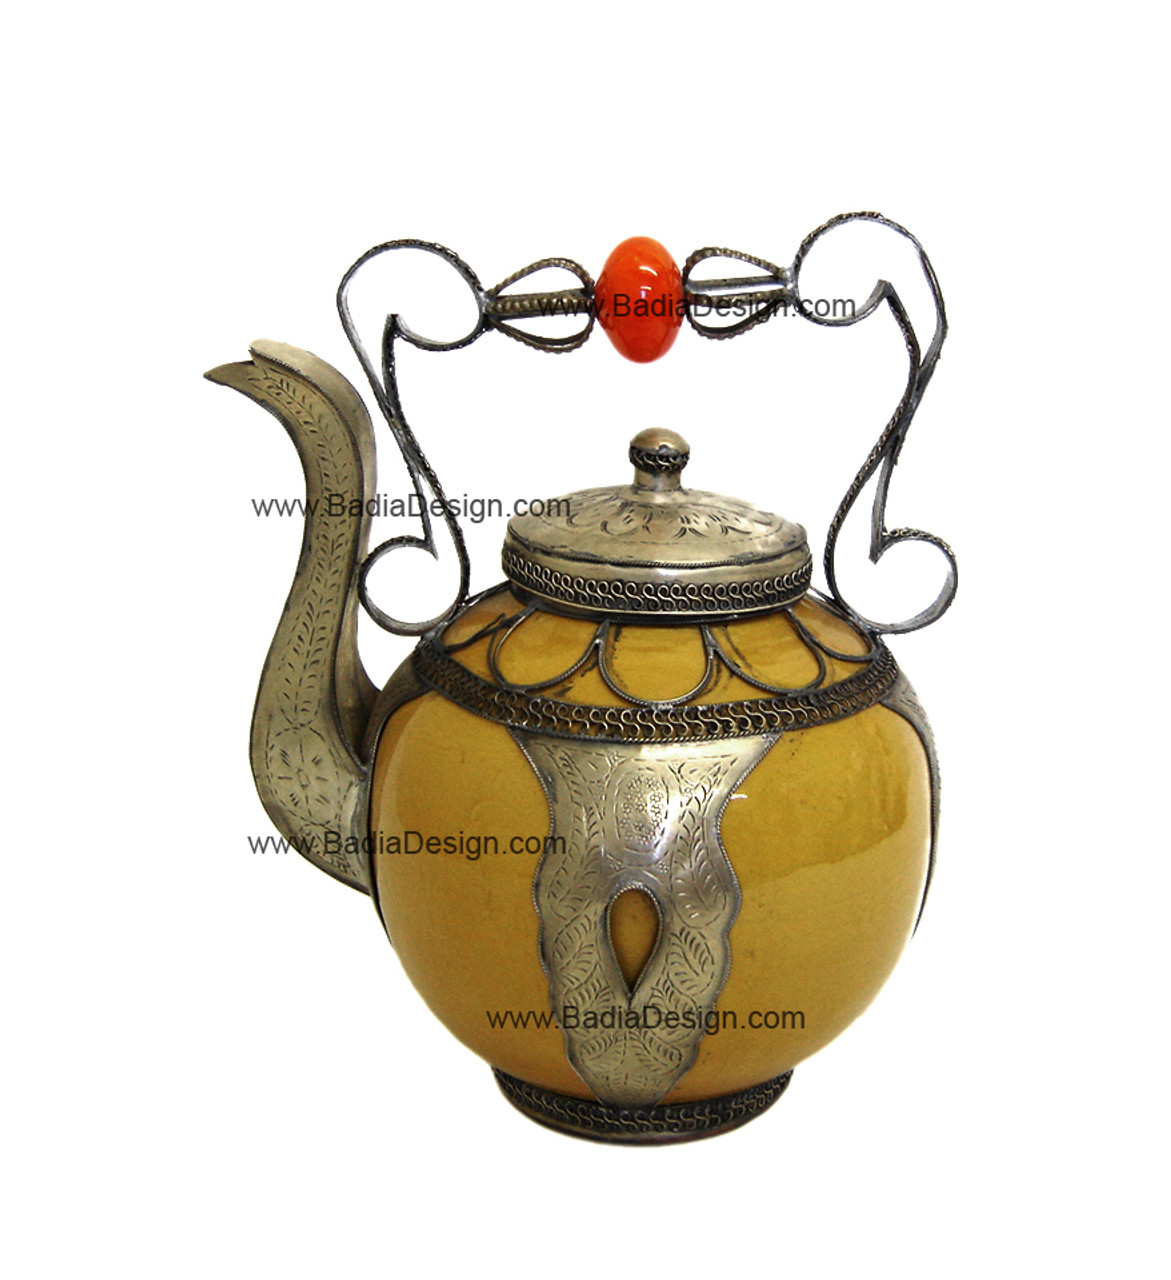 Moroccan Decorative Ceramic and Metal Teapot - CER02